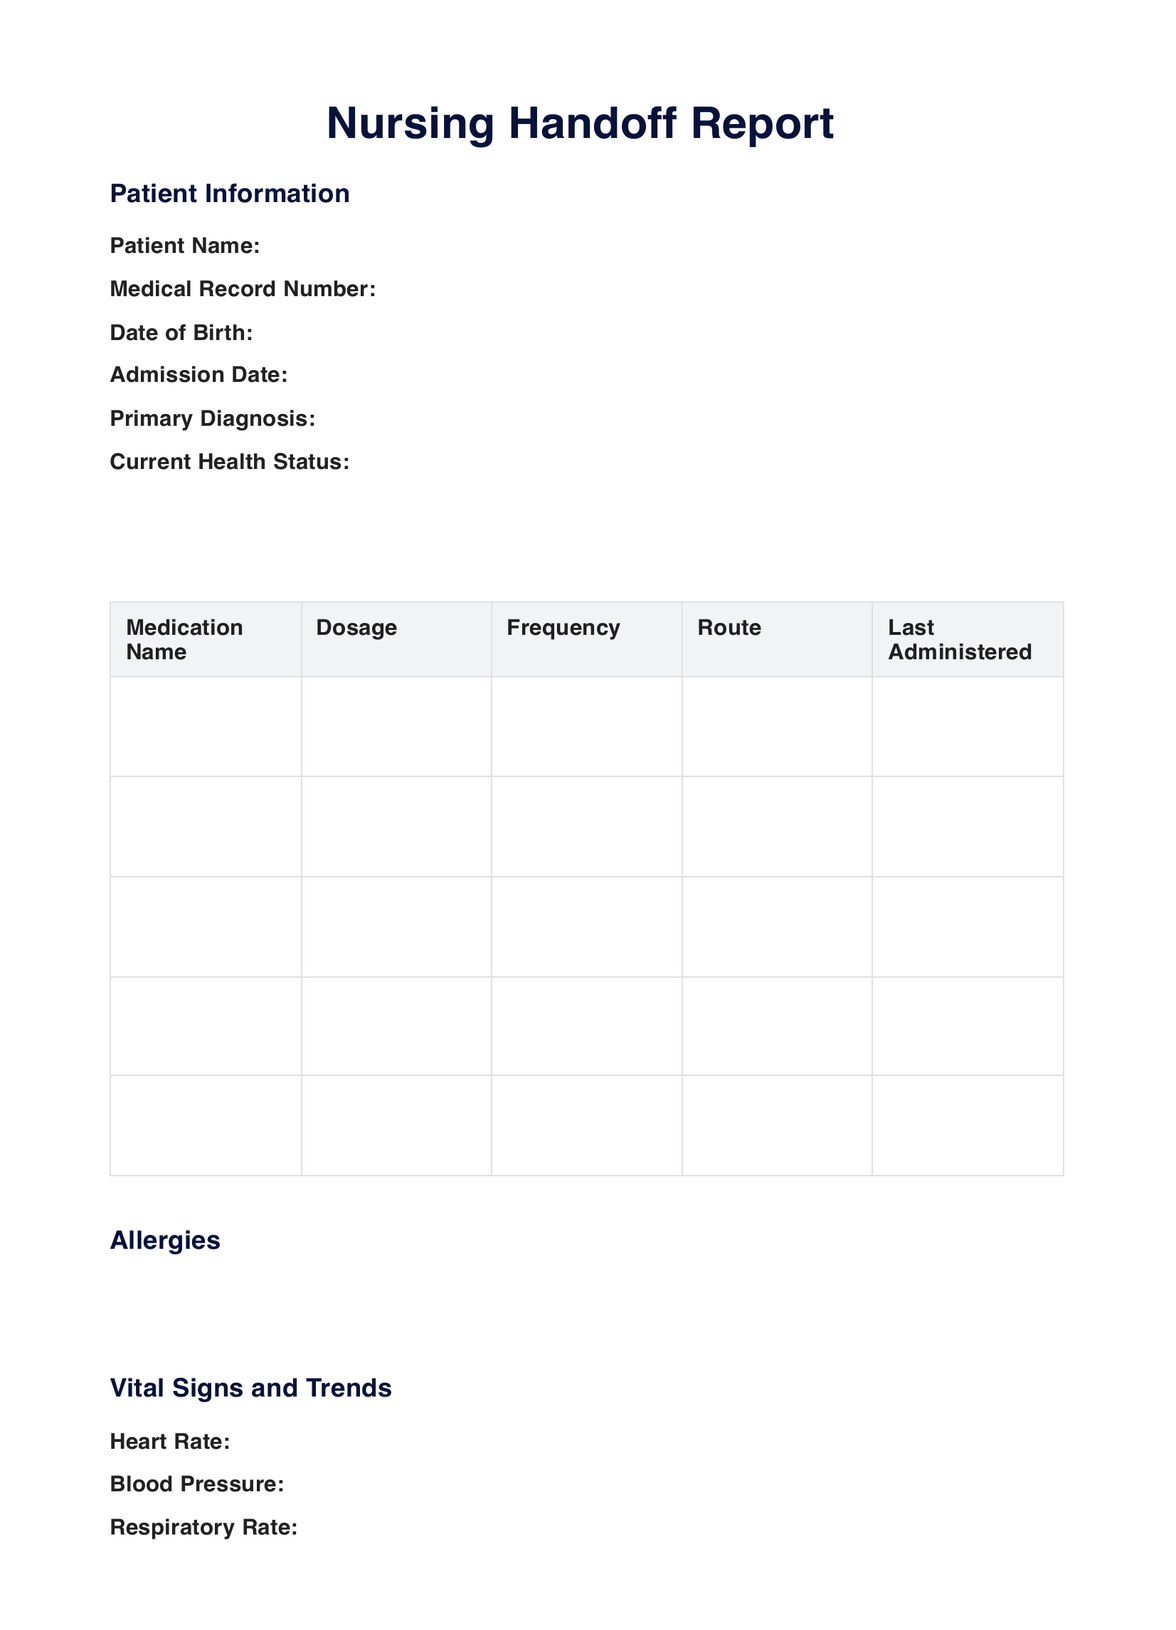 Nursing Handoff Report Template PDF Example